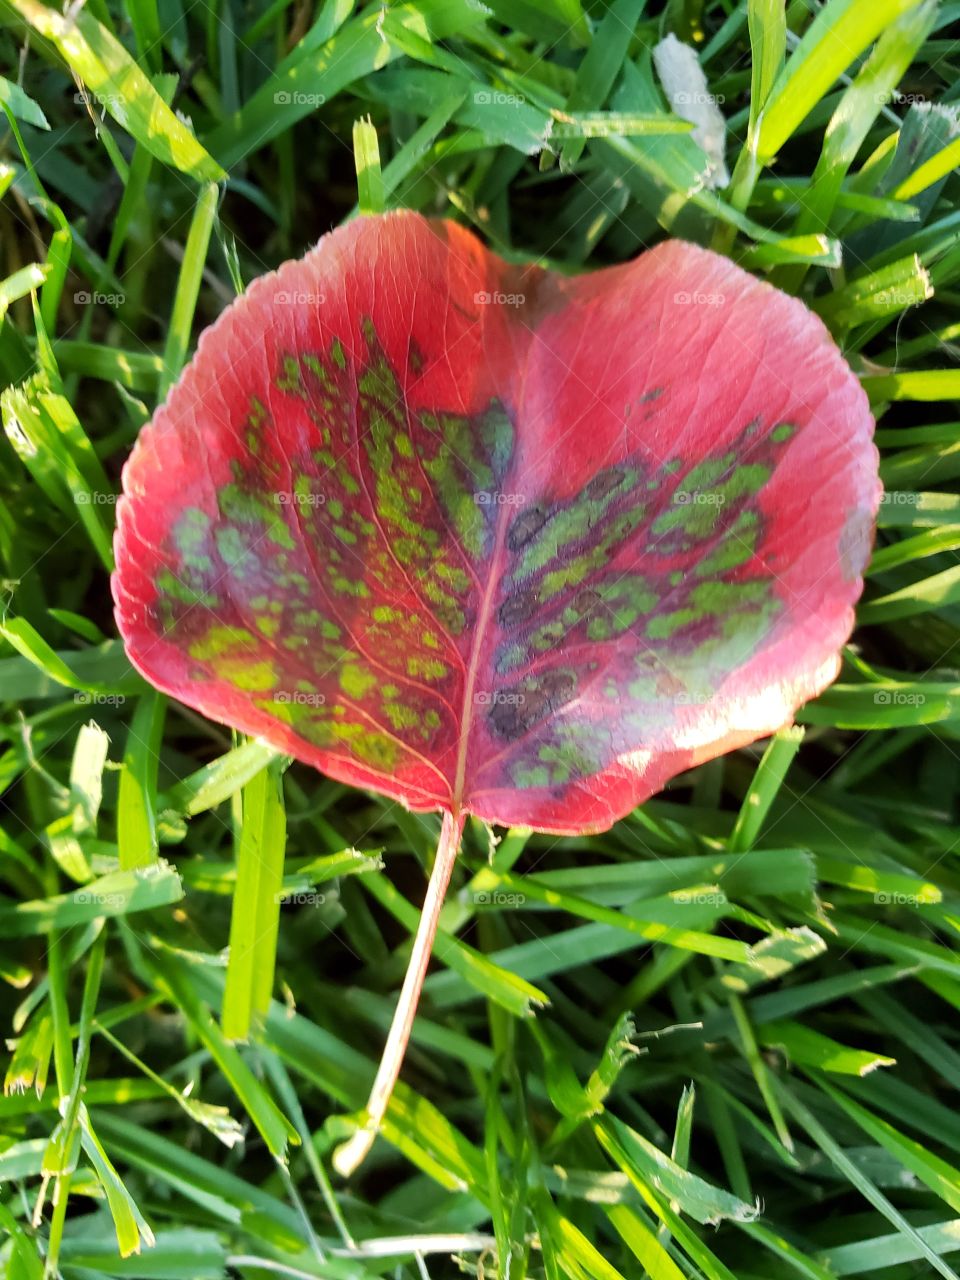 Autumn leaf found in my backyard in late spring.